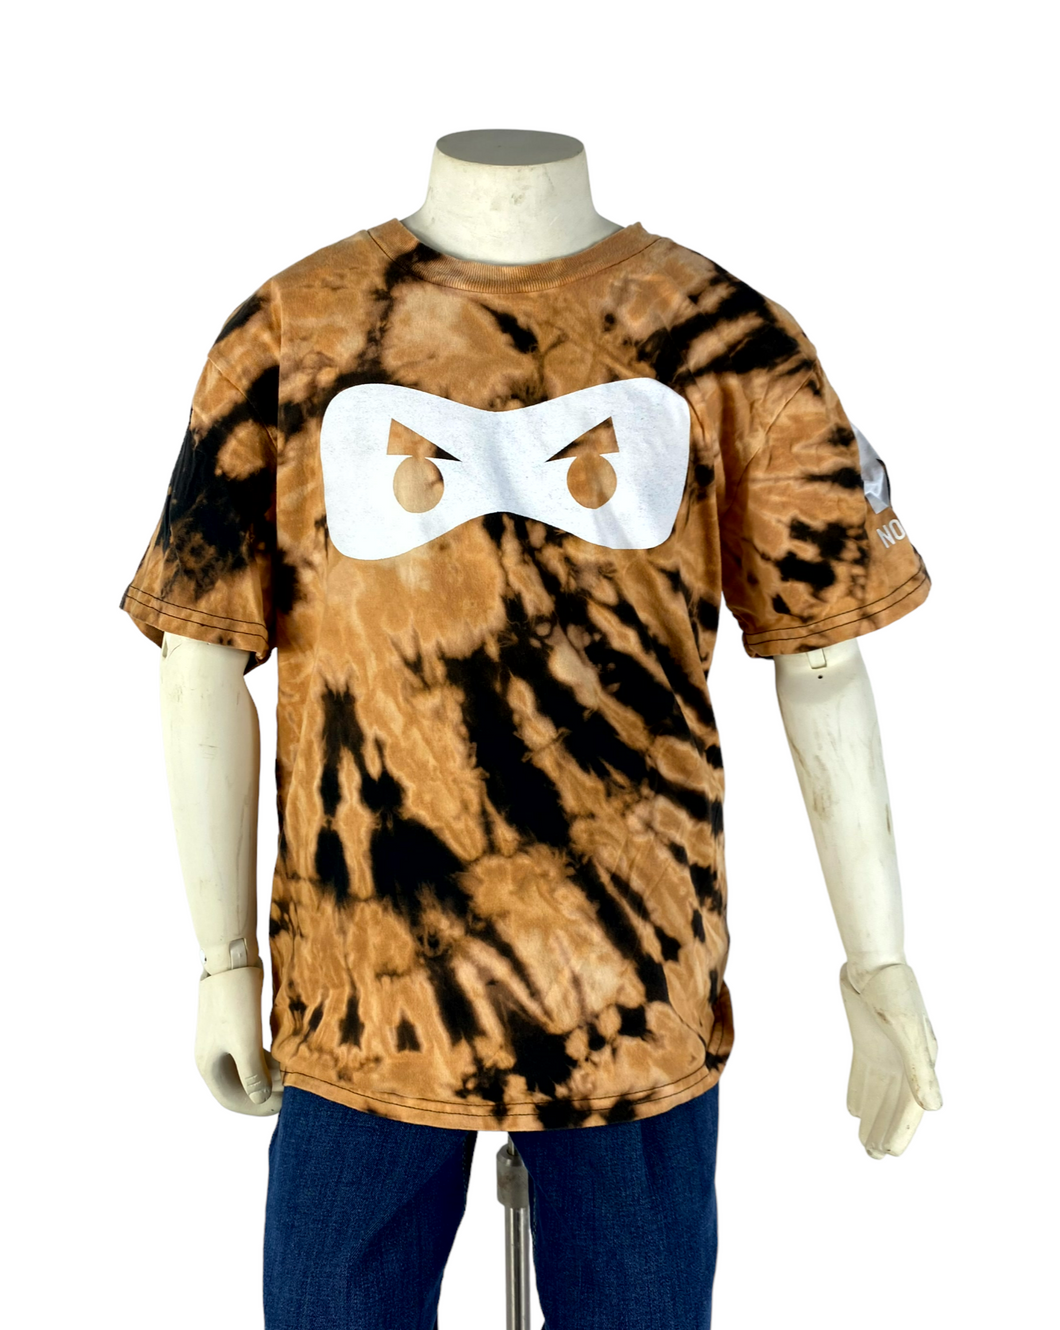 Ninja in Training Bleach Dye Kids T-Shirt - M (8/10)